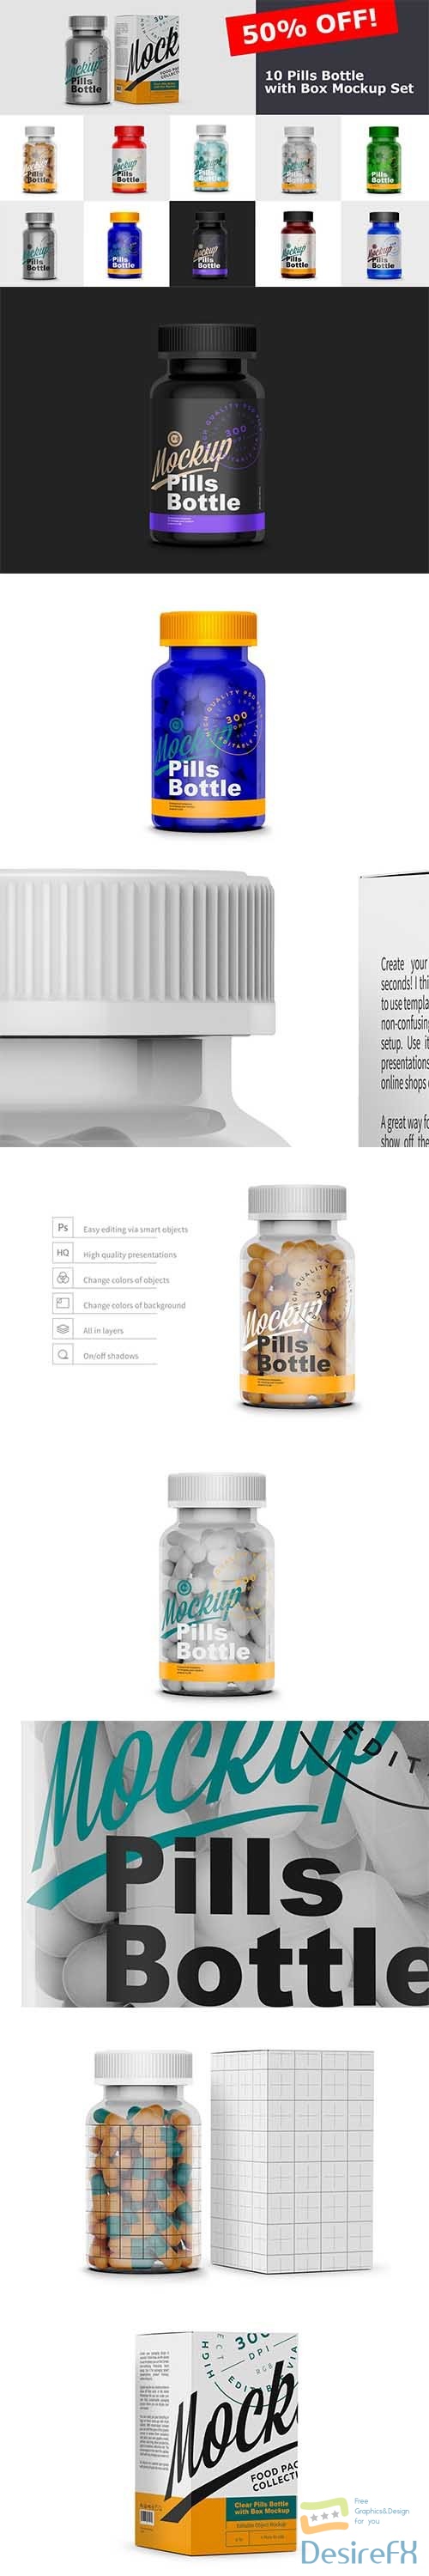 CreativeMarket - Pills Bottle with Box Mockup Set 6374641